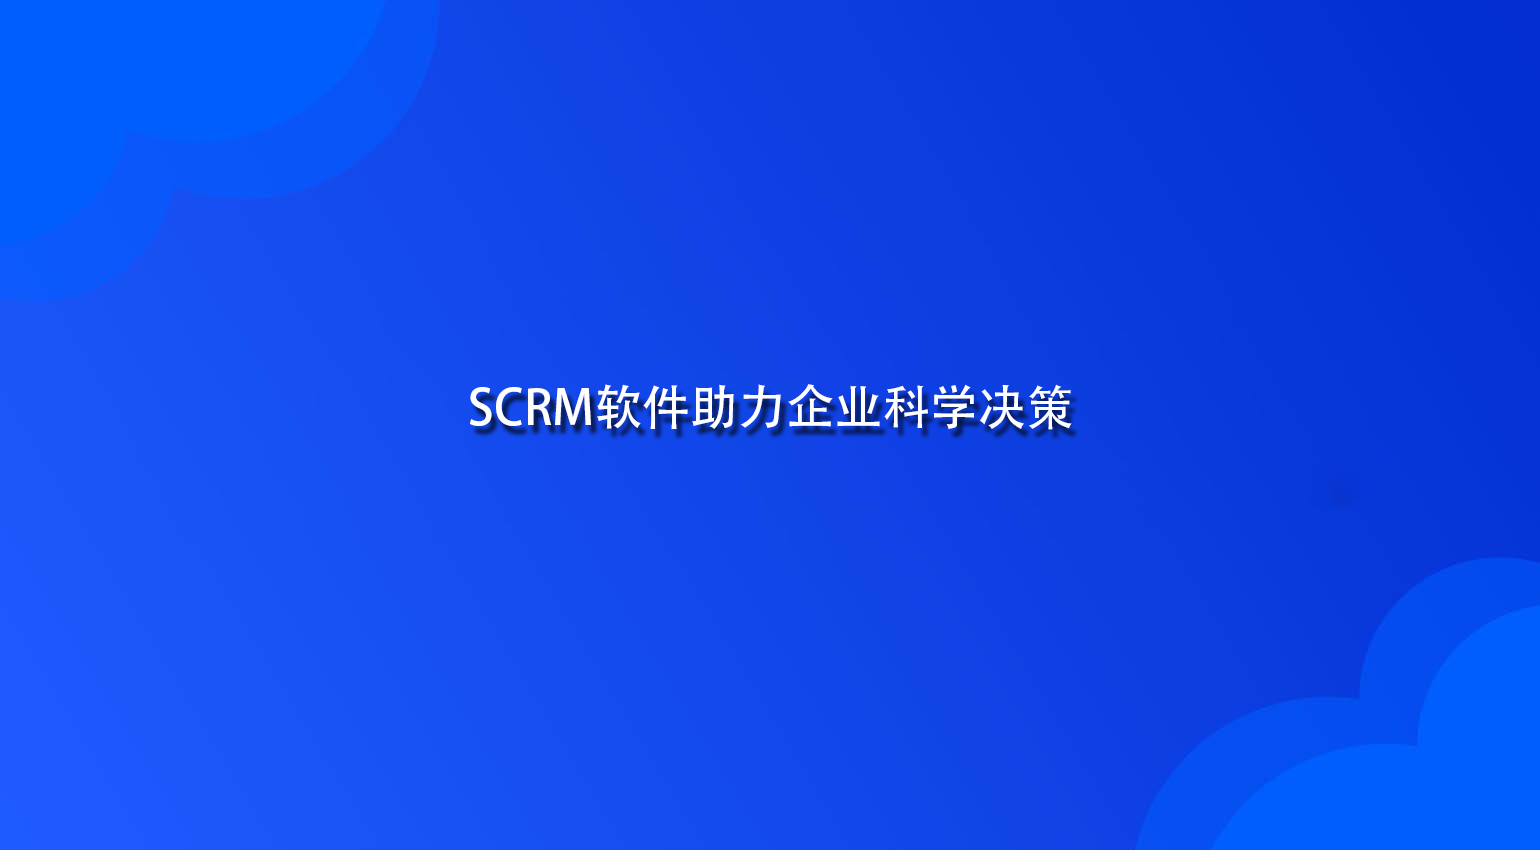 SCRM软件助力企业科学决策